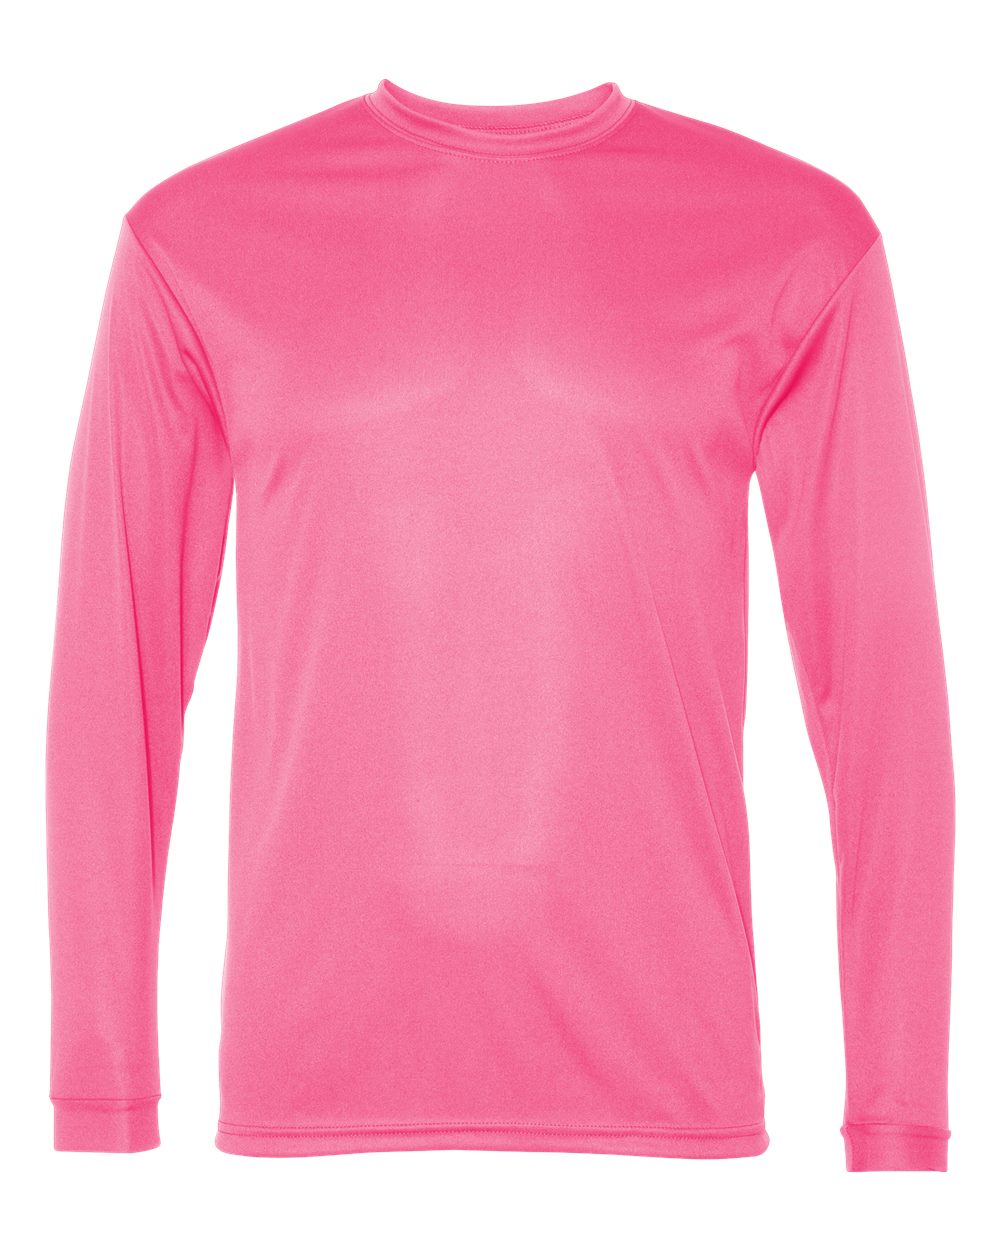 C2 Sport - Performance Long Sleeve T-Shirt - 5104, Dri Fit – Shirts23 -  Premium Blank Shirts & More!